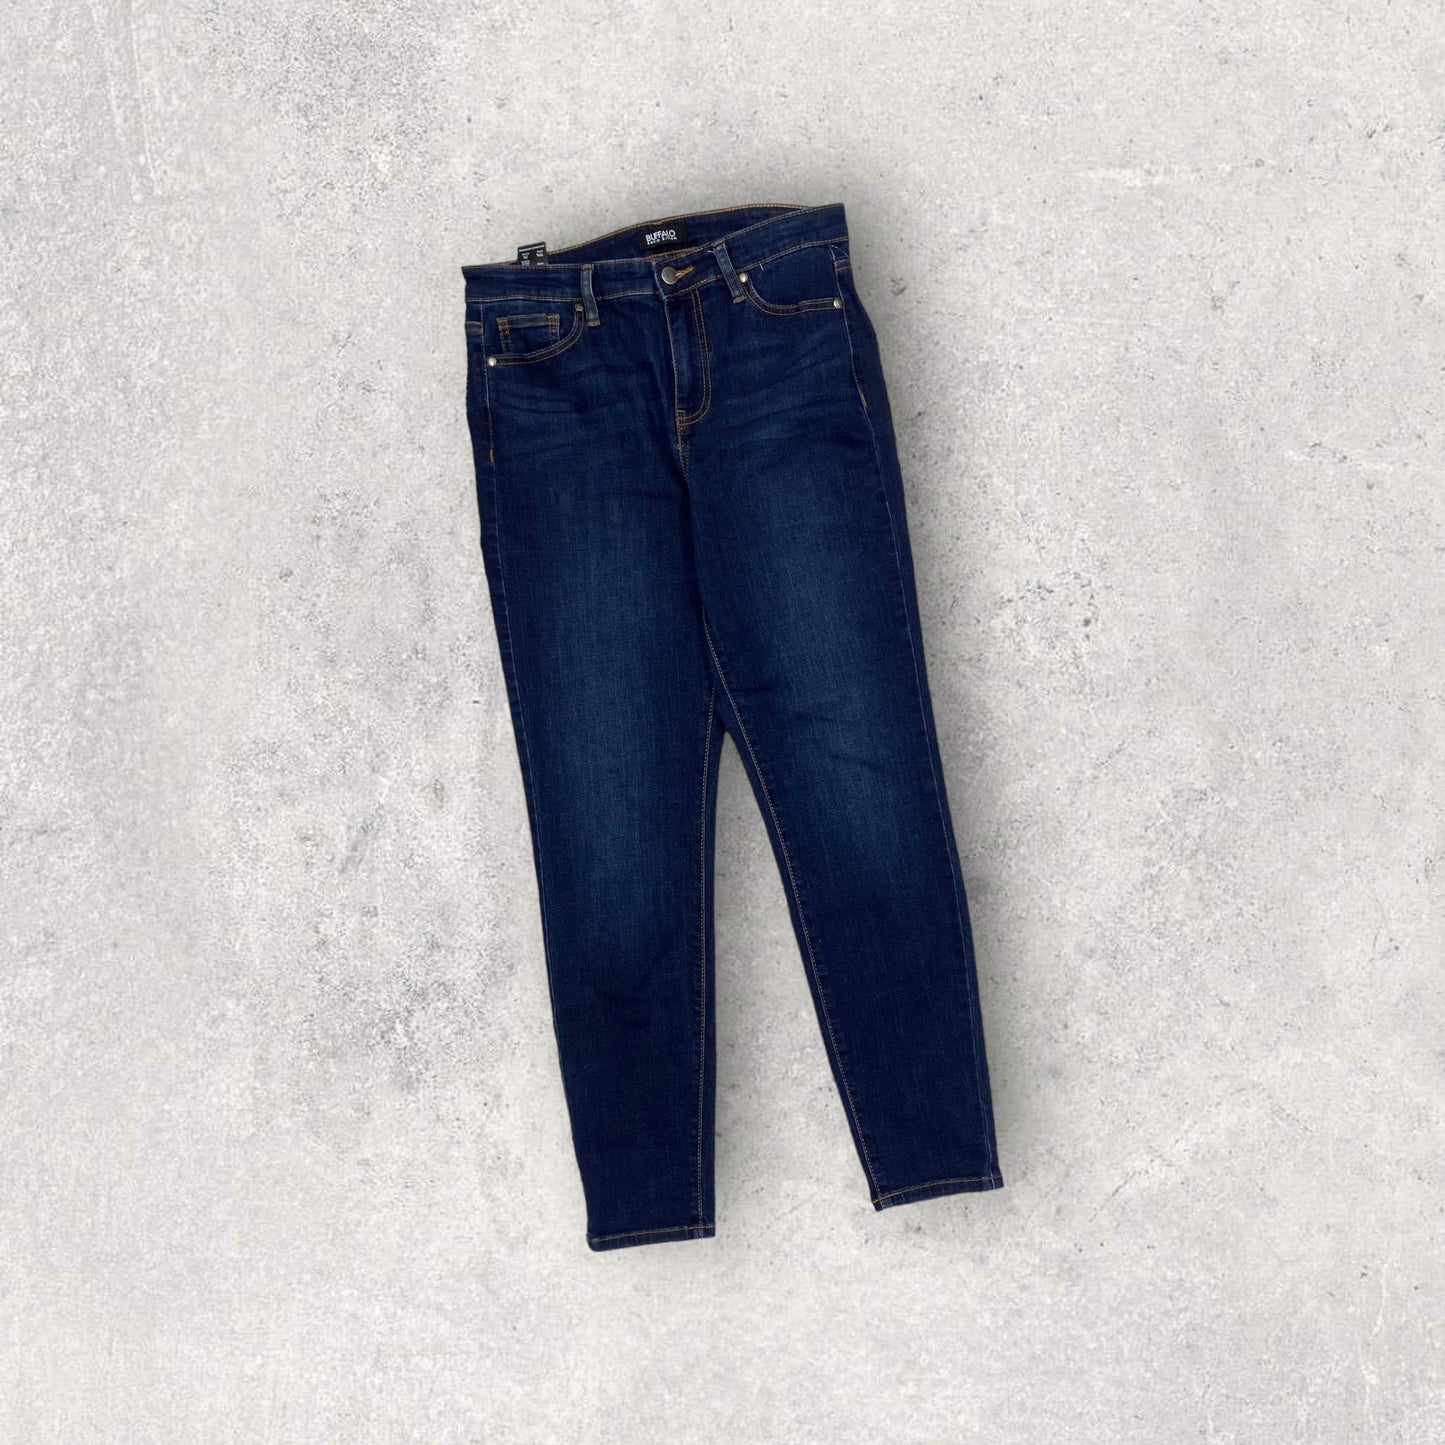 Jeans Skinny By Buffalo  Size: 6